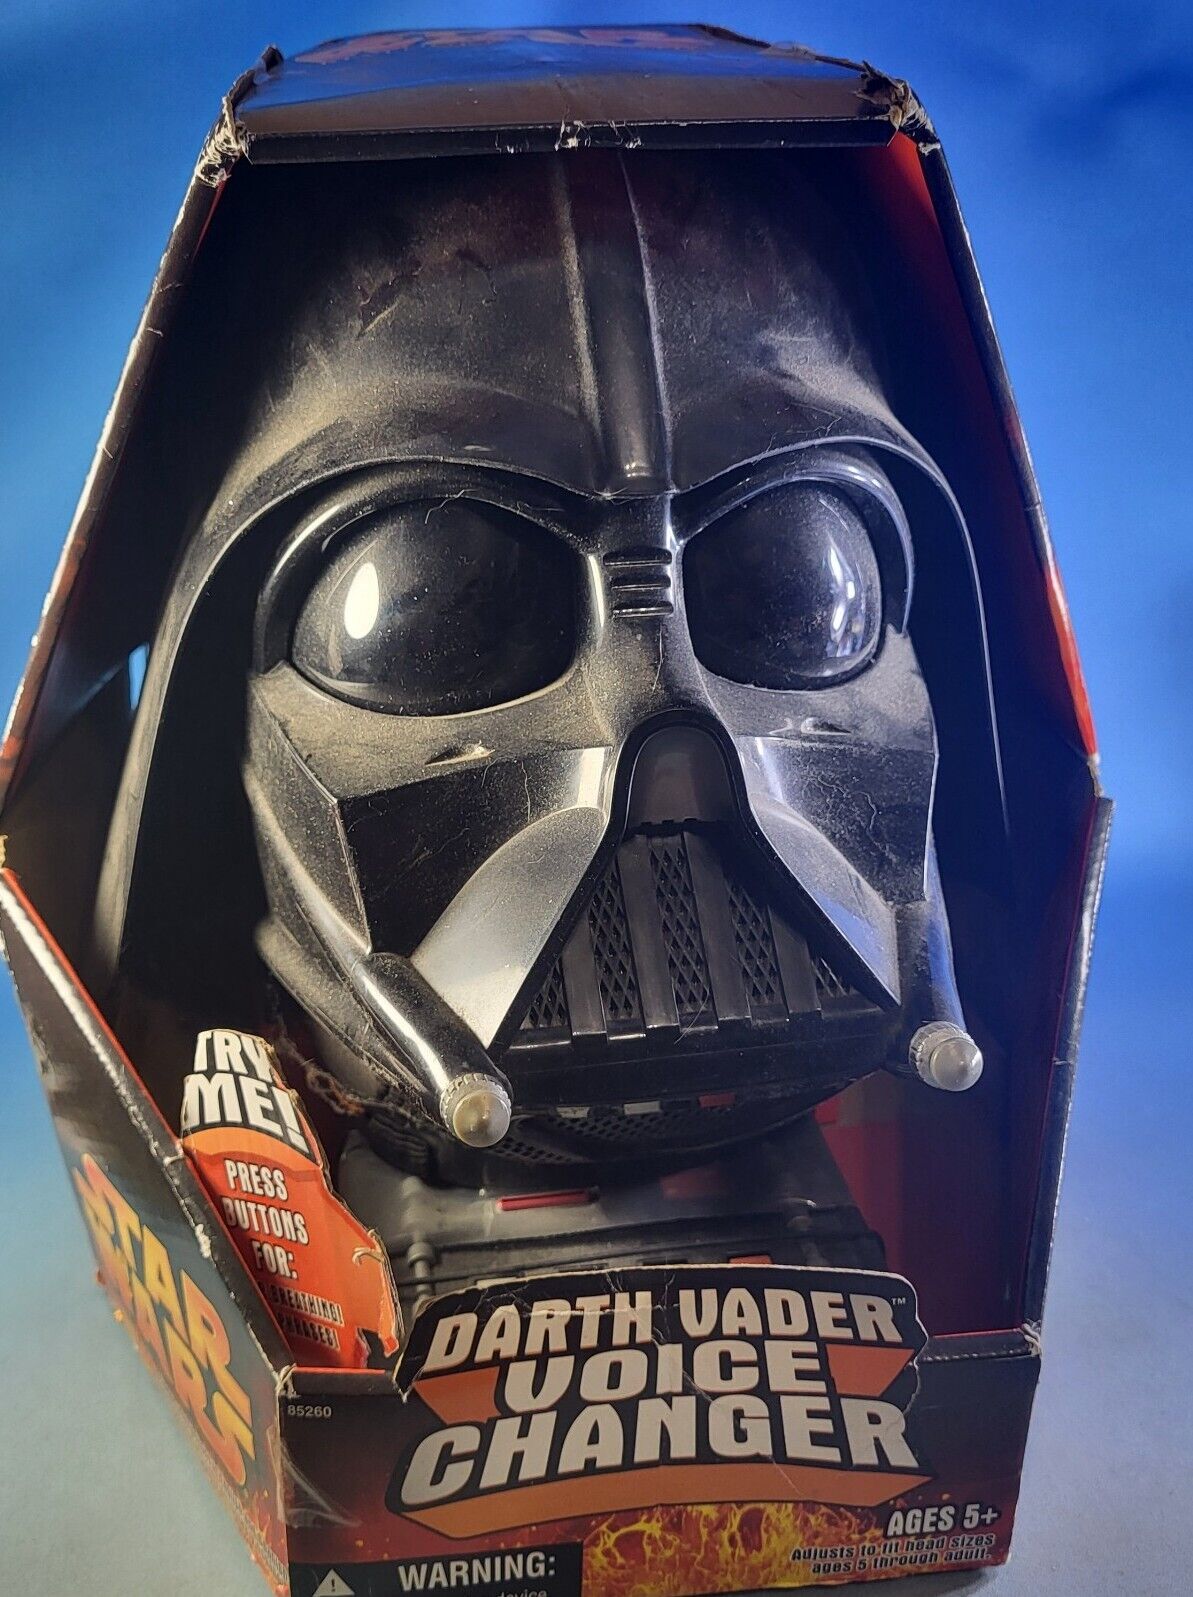 2005 Hasbro Star Wars Revenge Of The Sith Darth Vader Voice Changer Helmet